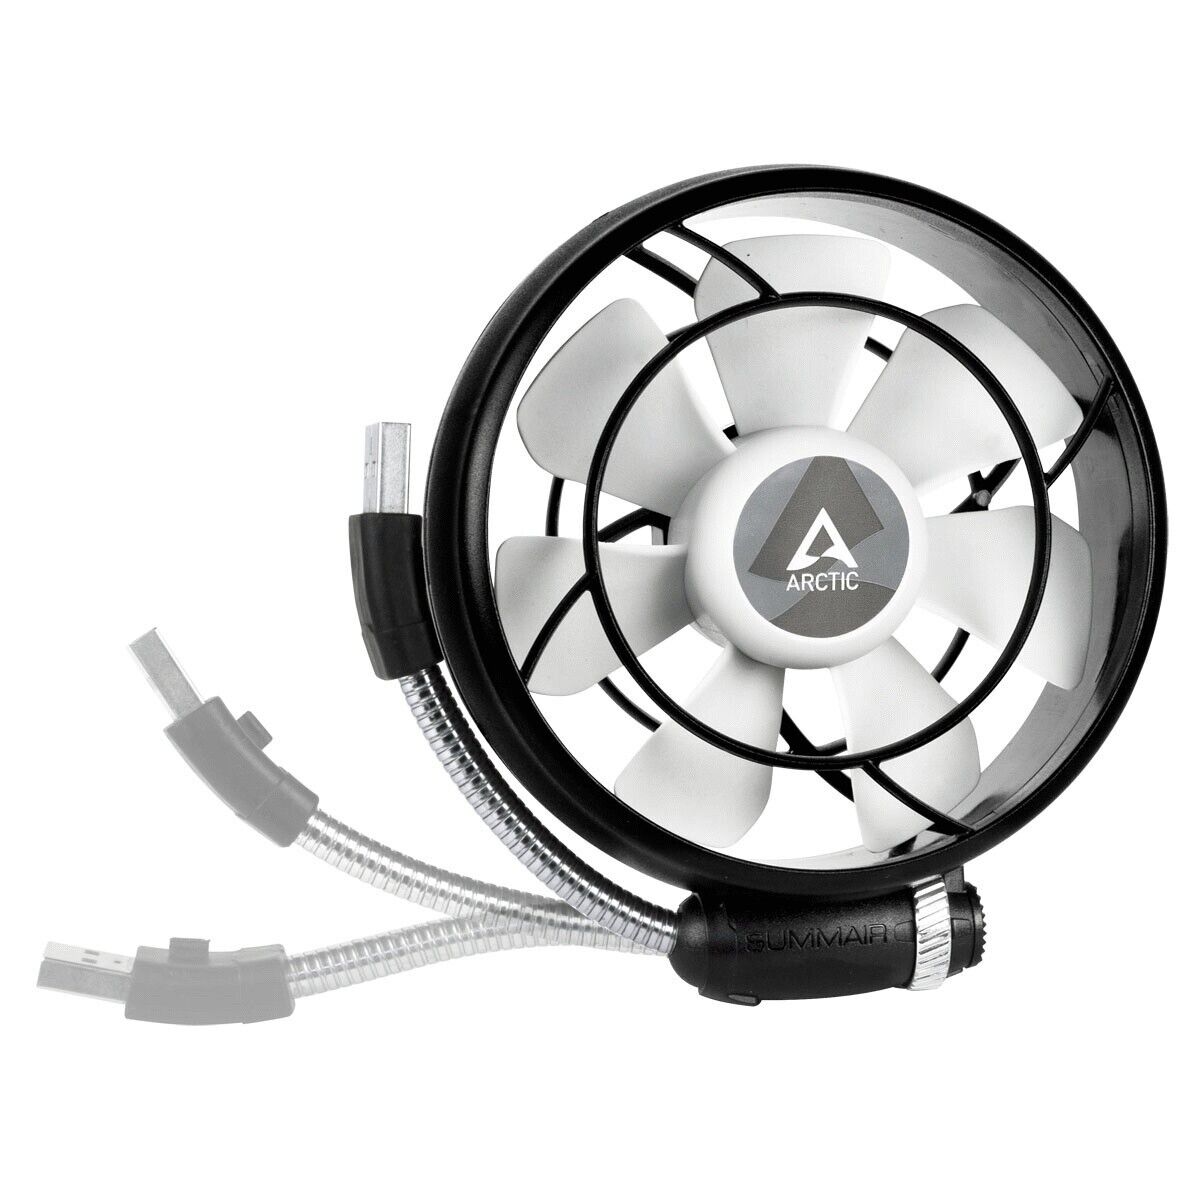 Arctic Summair Light Mobile USB Cooling Fan Laptop Travelling Size AEBRZ00018A